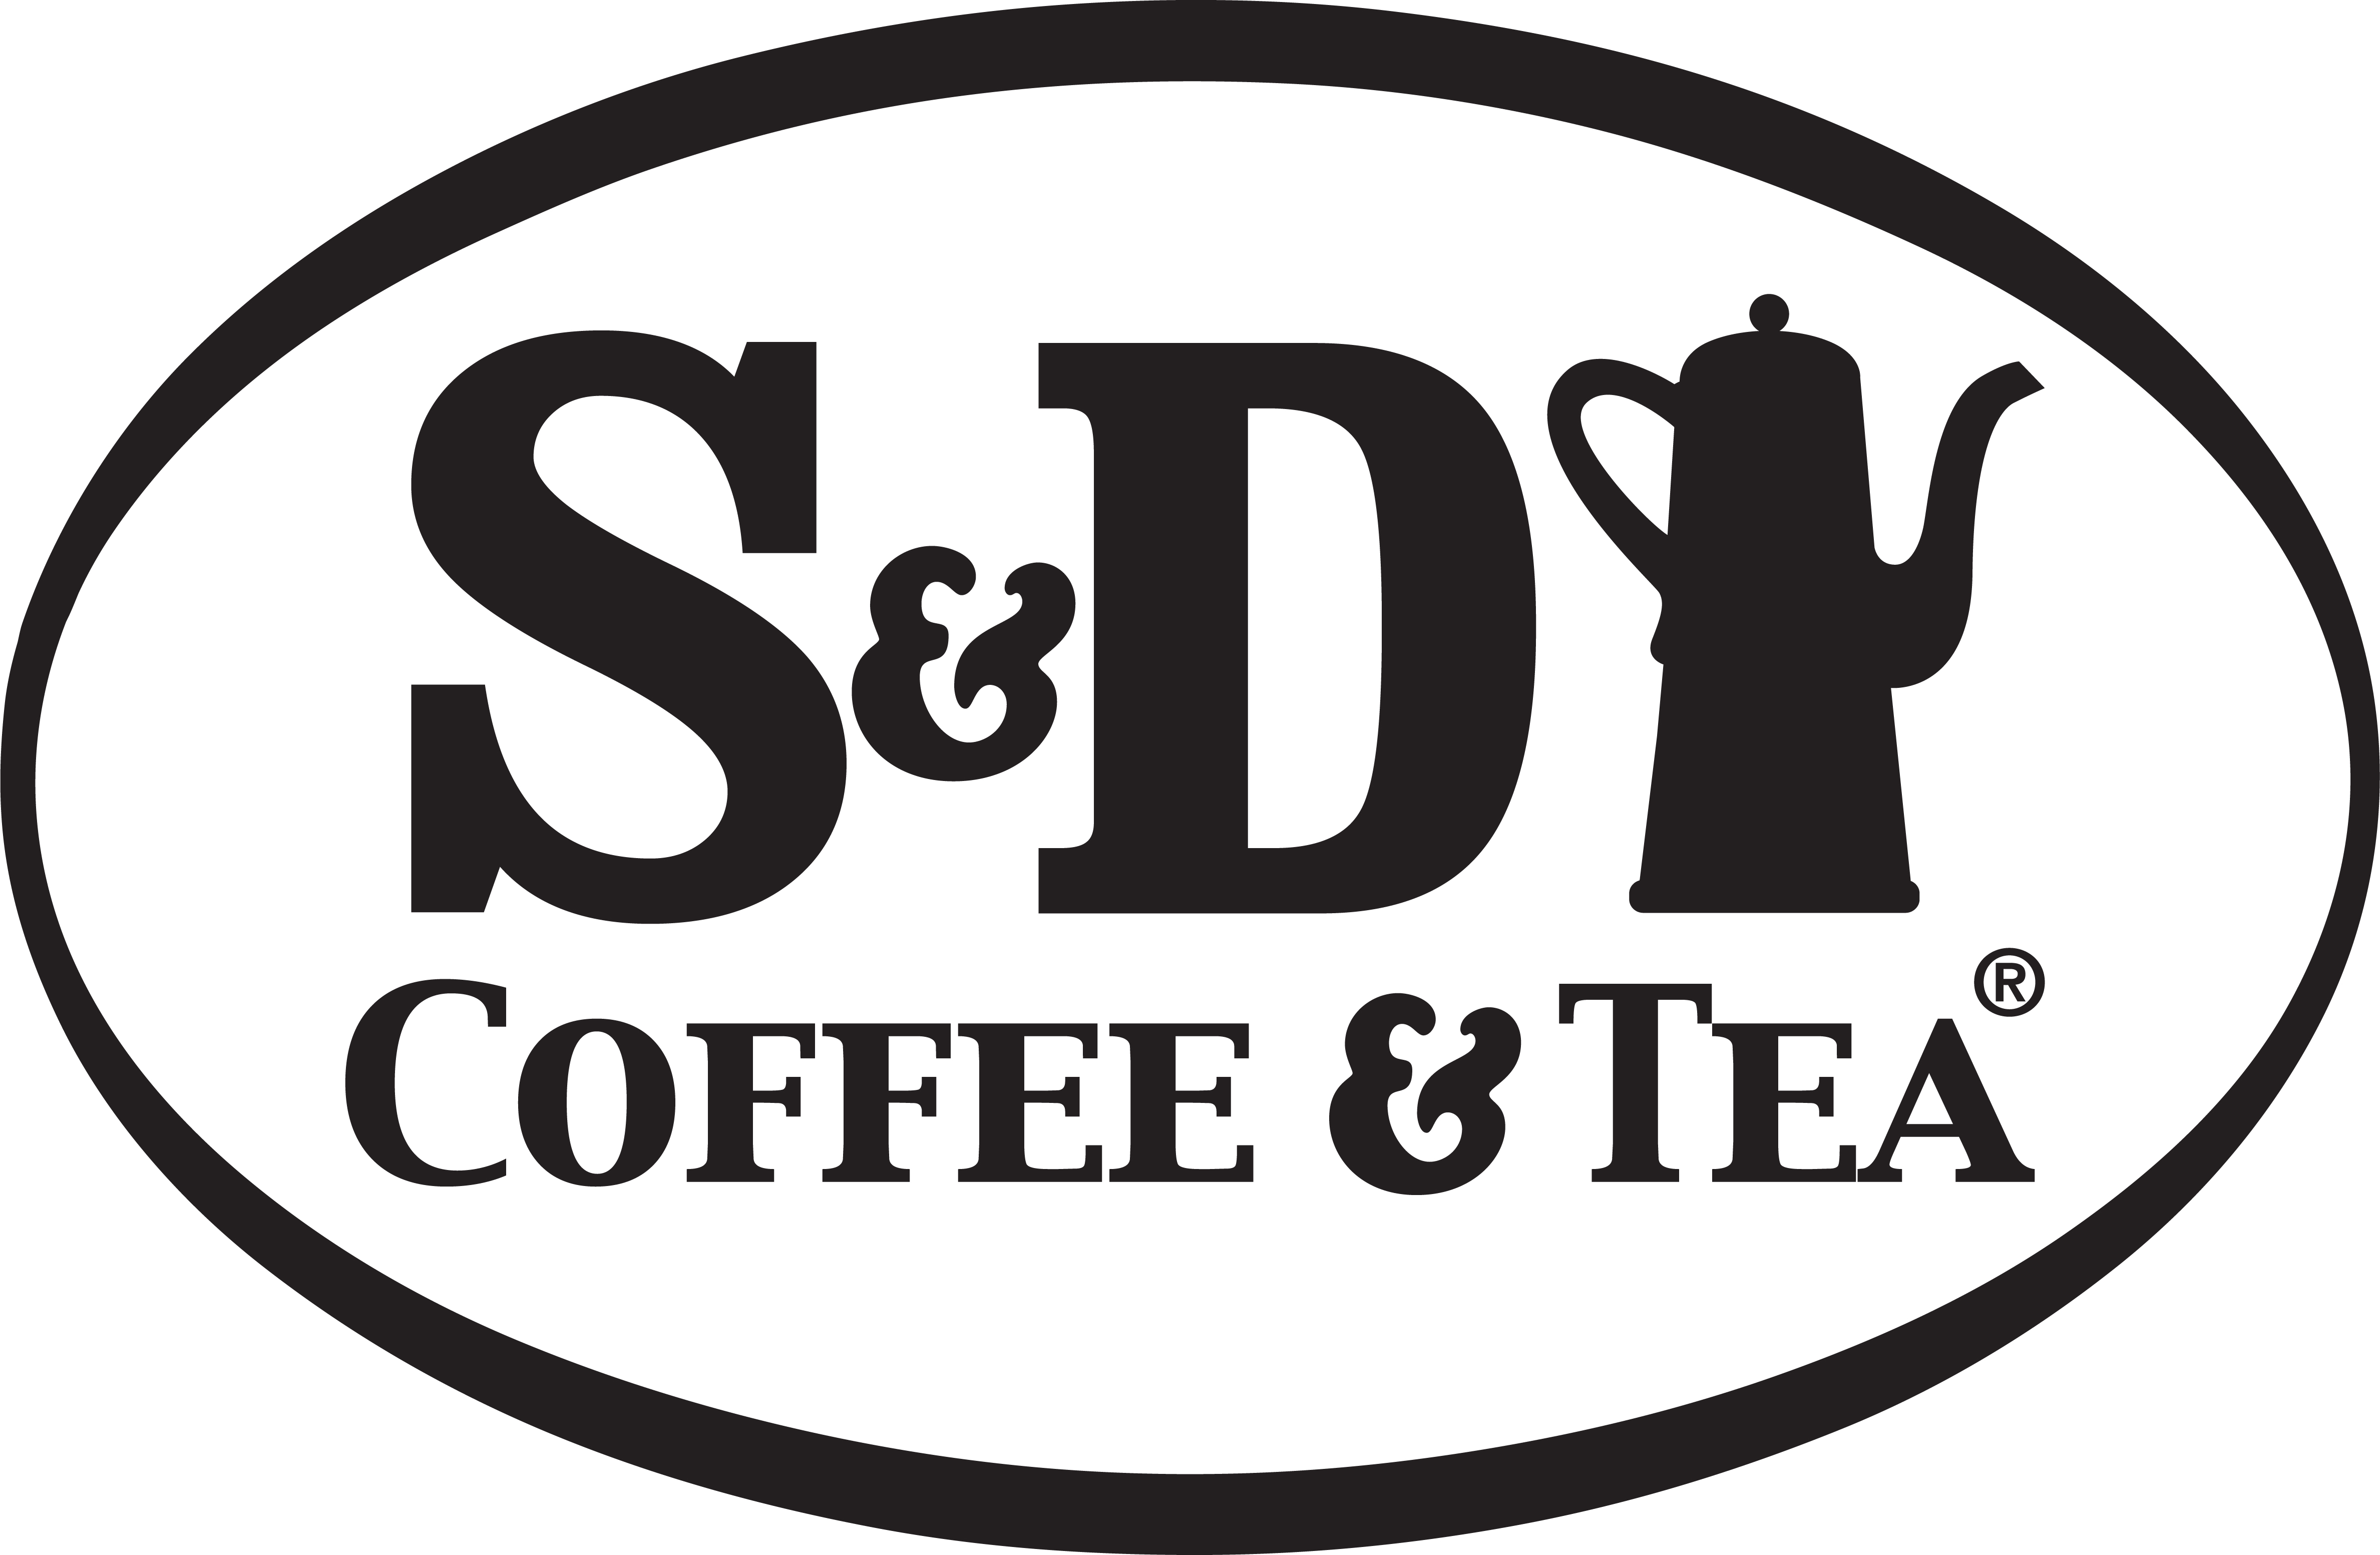 S&D Coffee